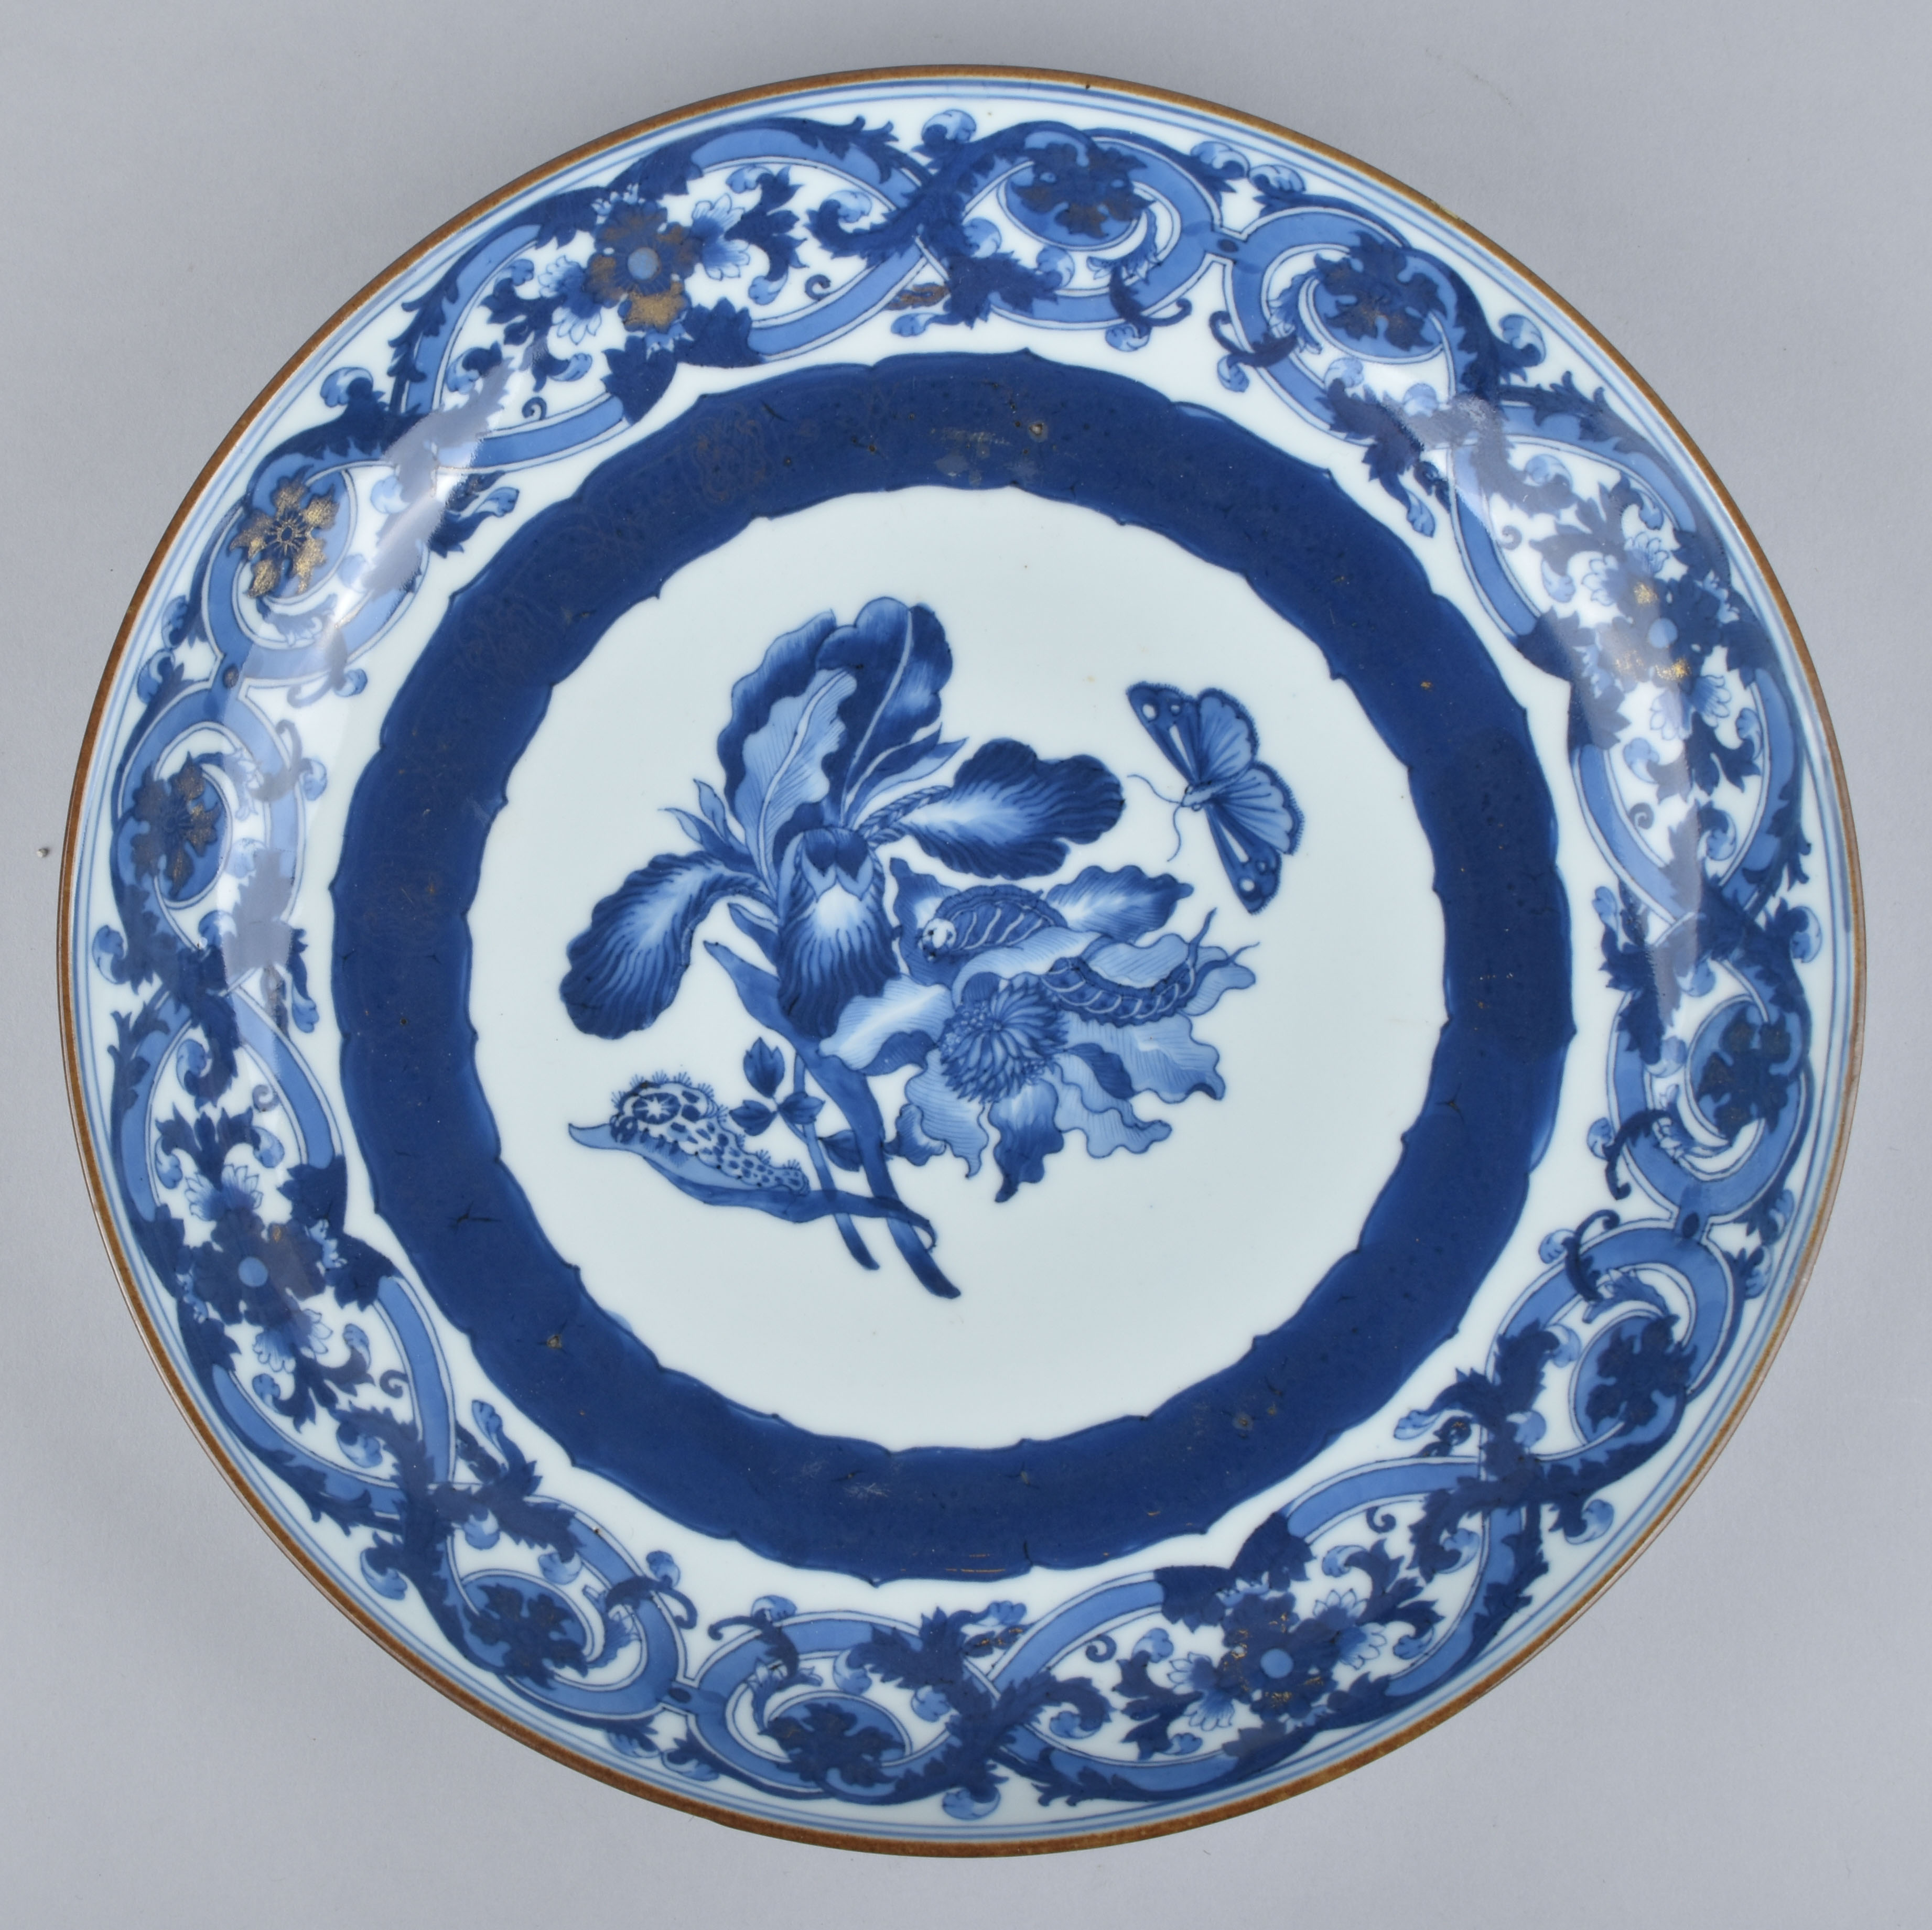 Porcelaine Qianlong period (1736-1795), circa 1738, Chine